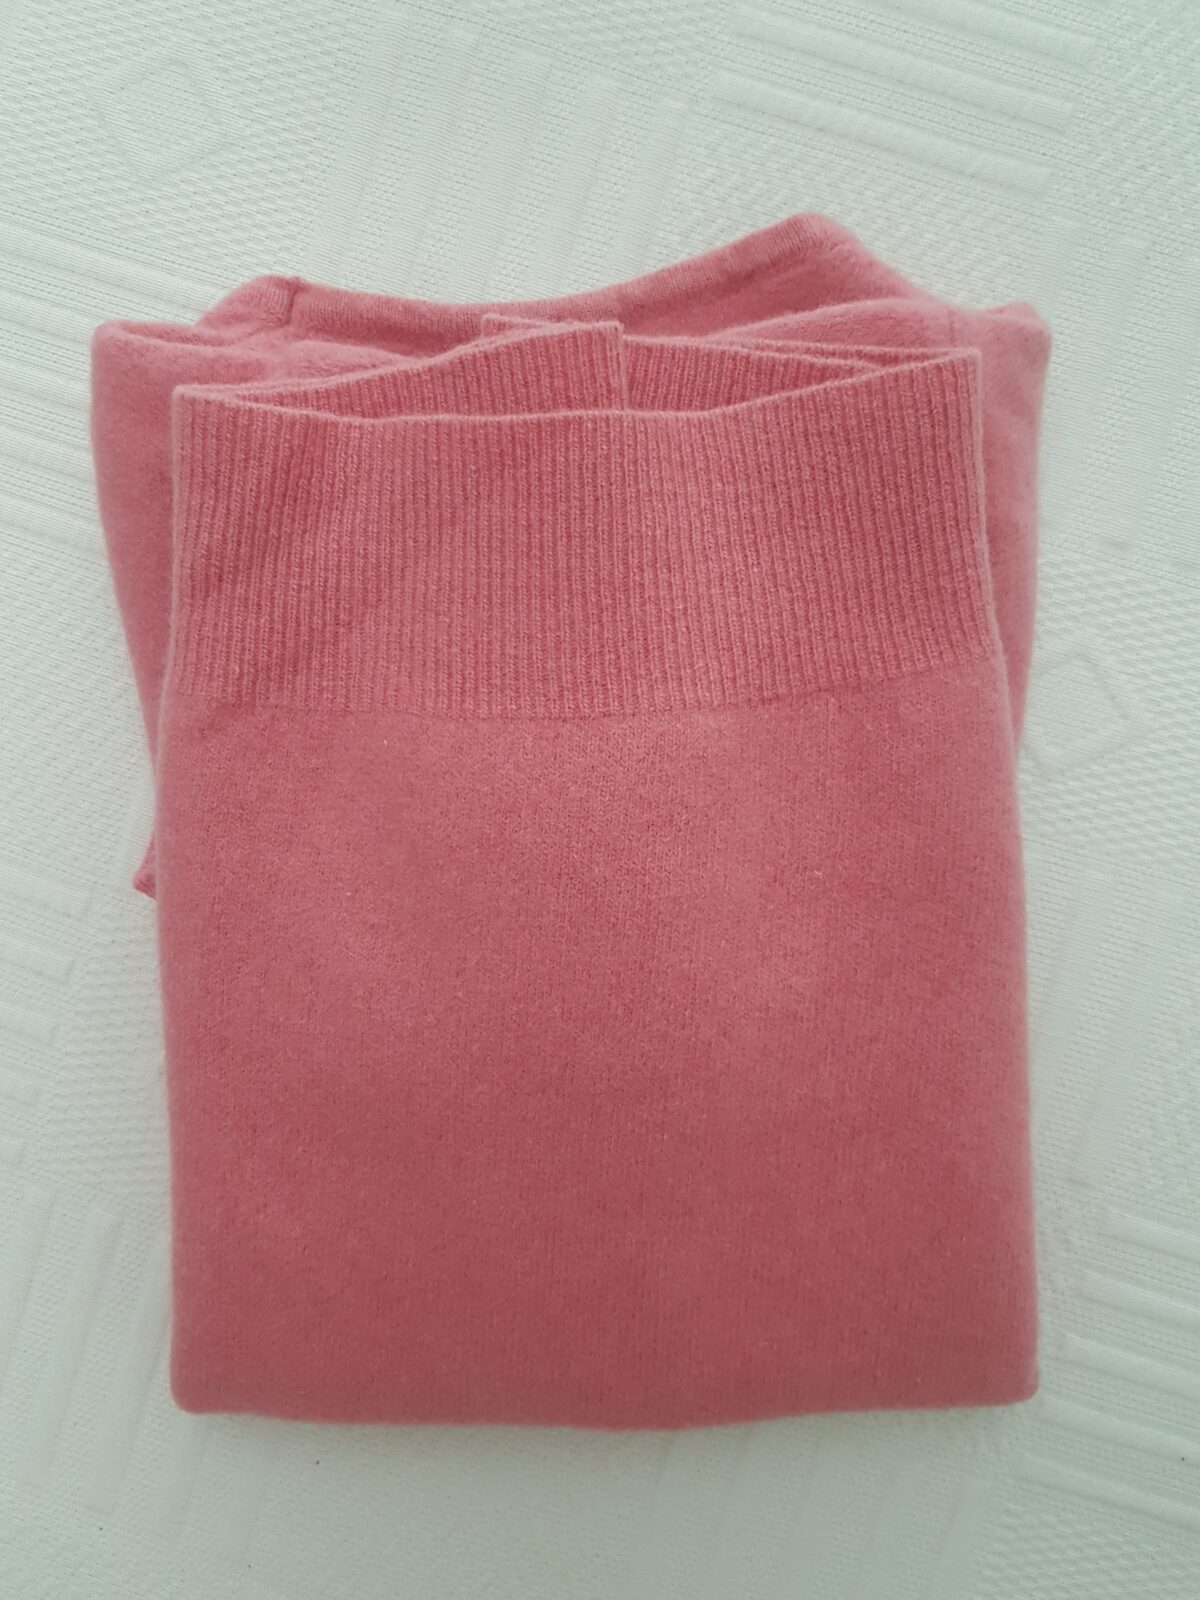 T-shirt Rosa, marca benetton, tamanho S 3